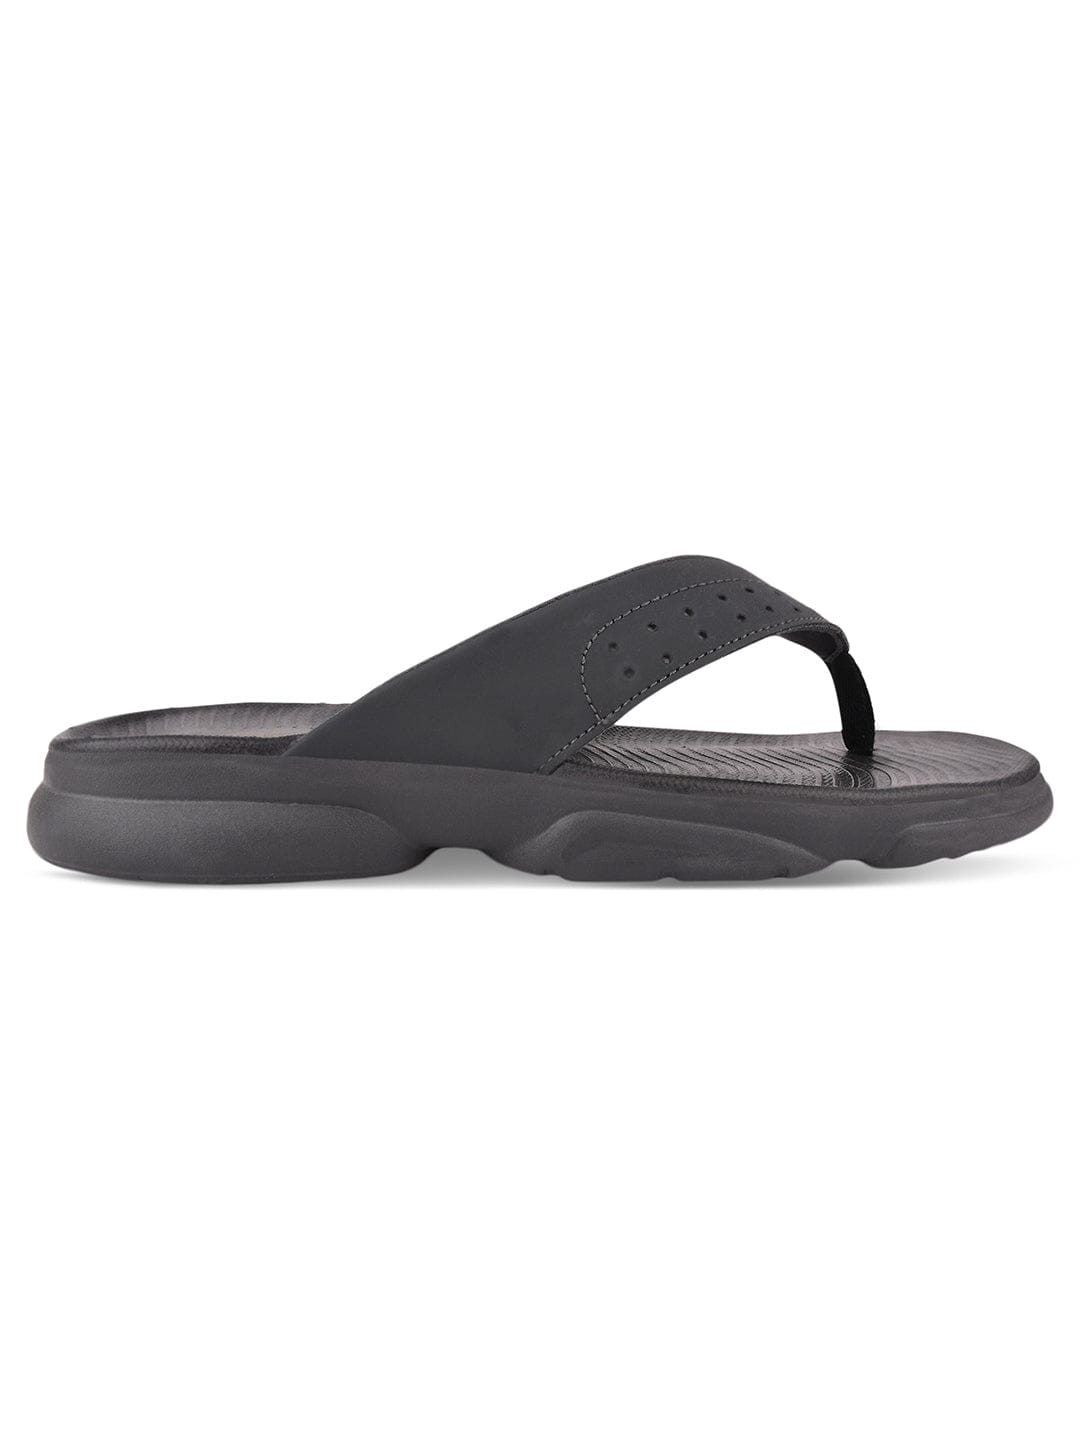 Buy Flip-Flop For Men: Sl-405A-Gry | Campus Shoes